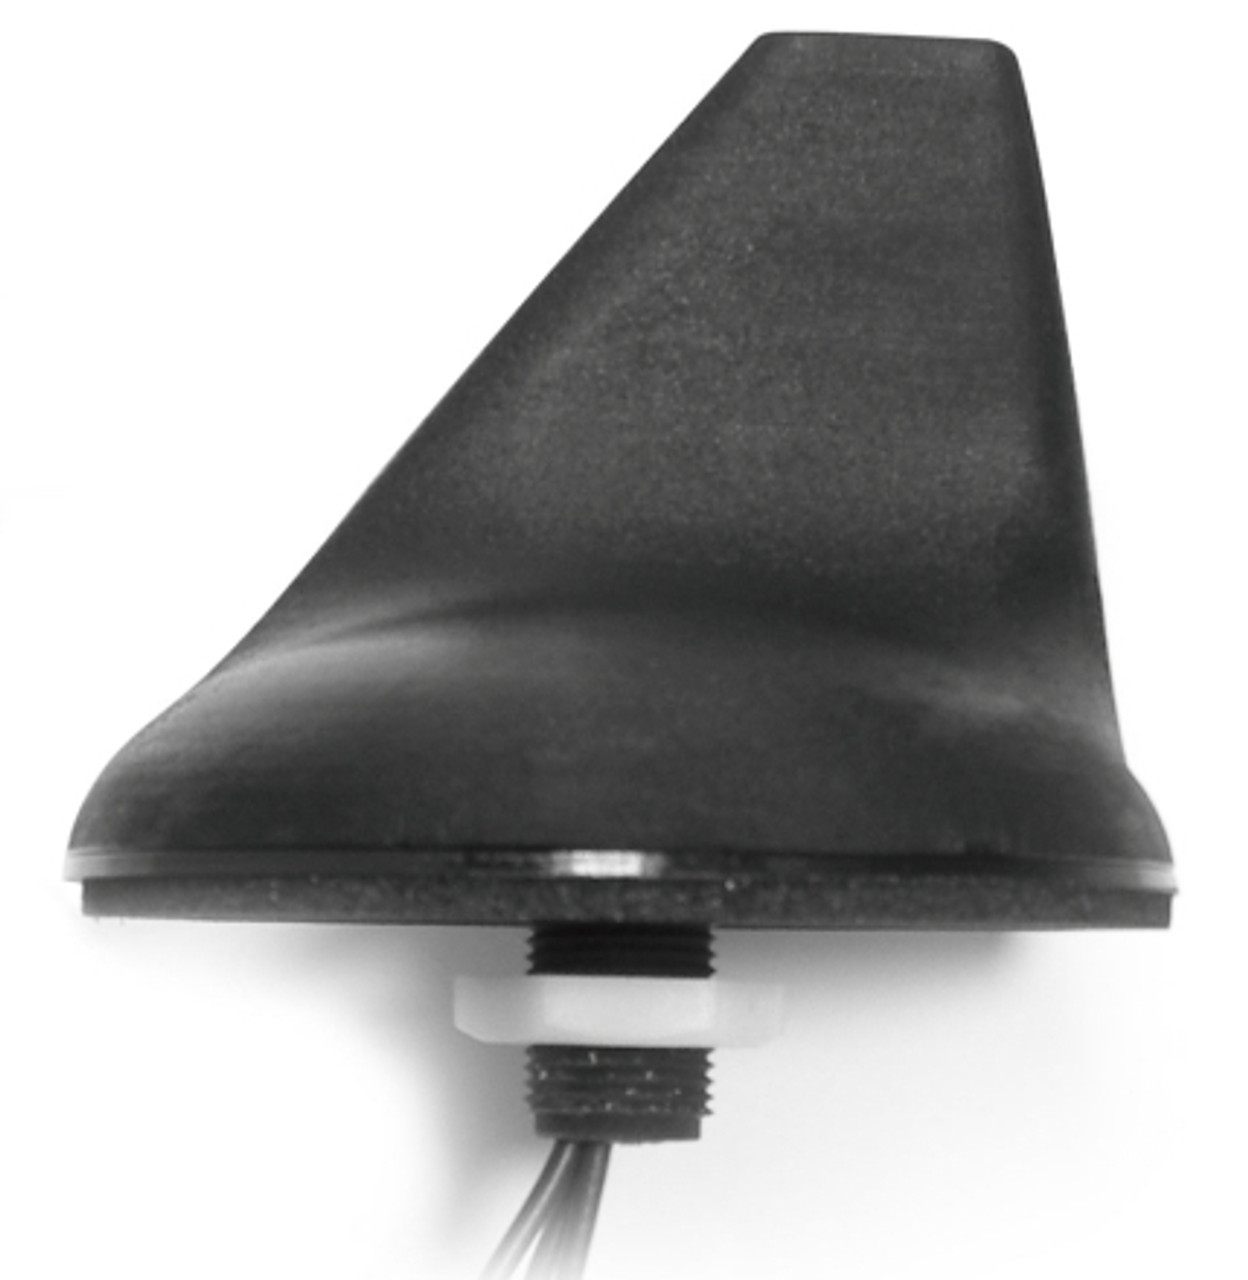 Cellular, GPS, LTE, WiFi & PCS Mobile Sharkfin Antenna (GPSDM700